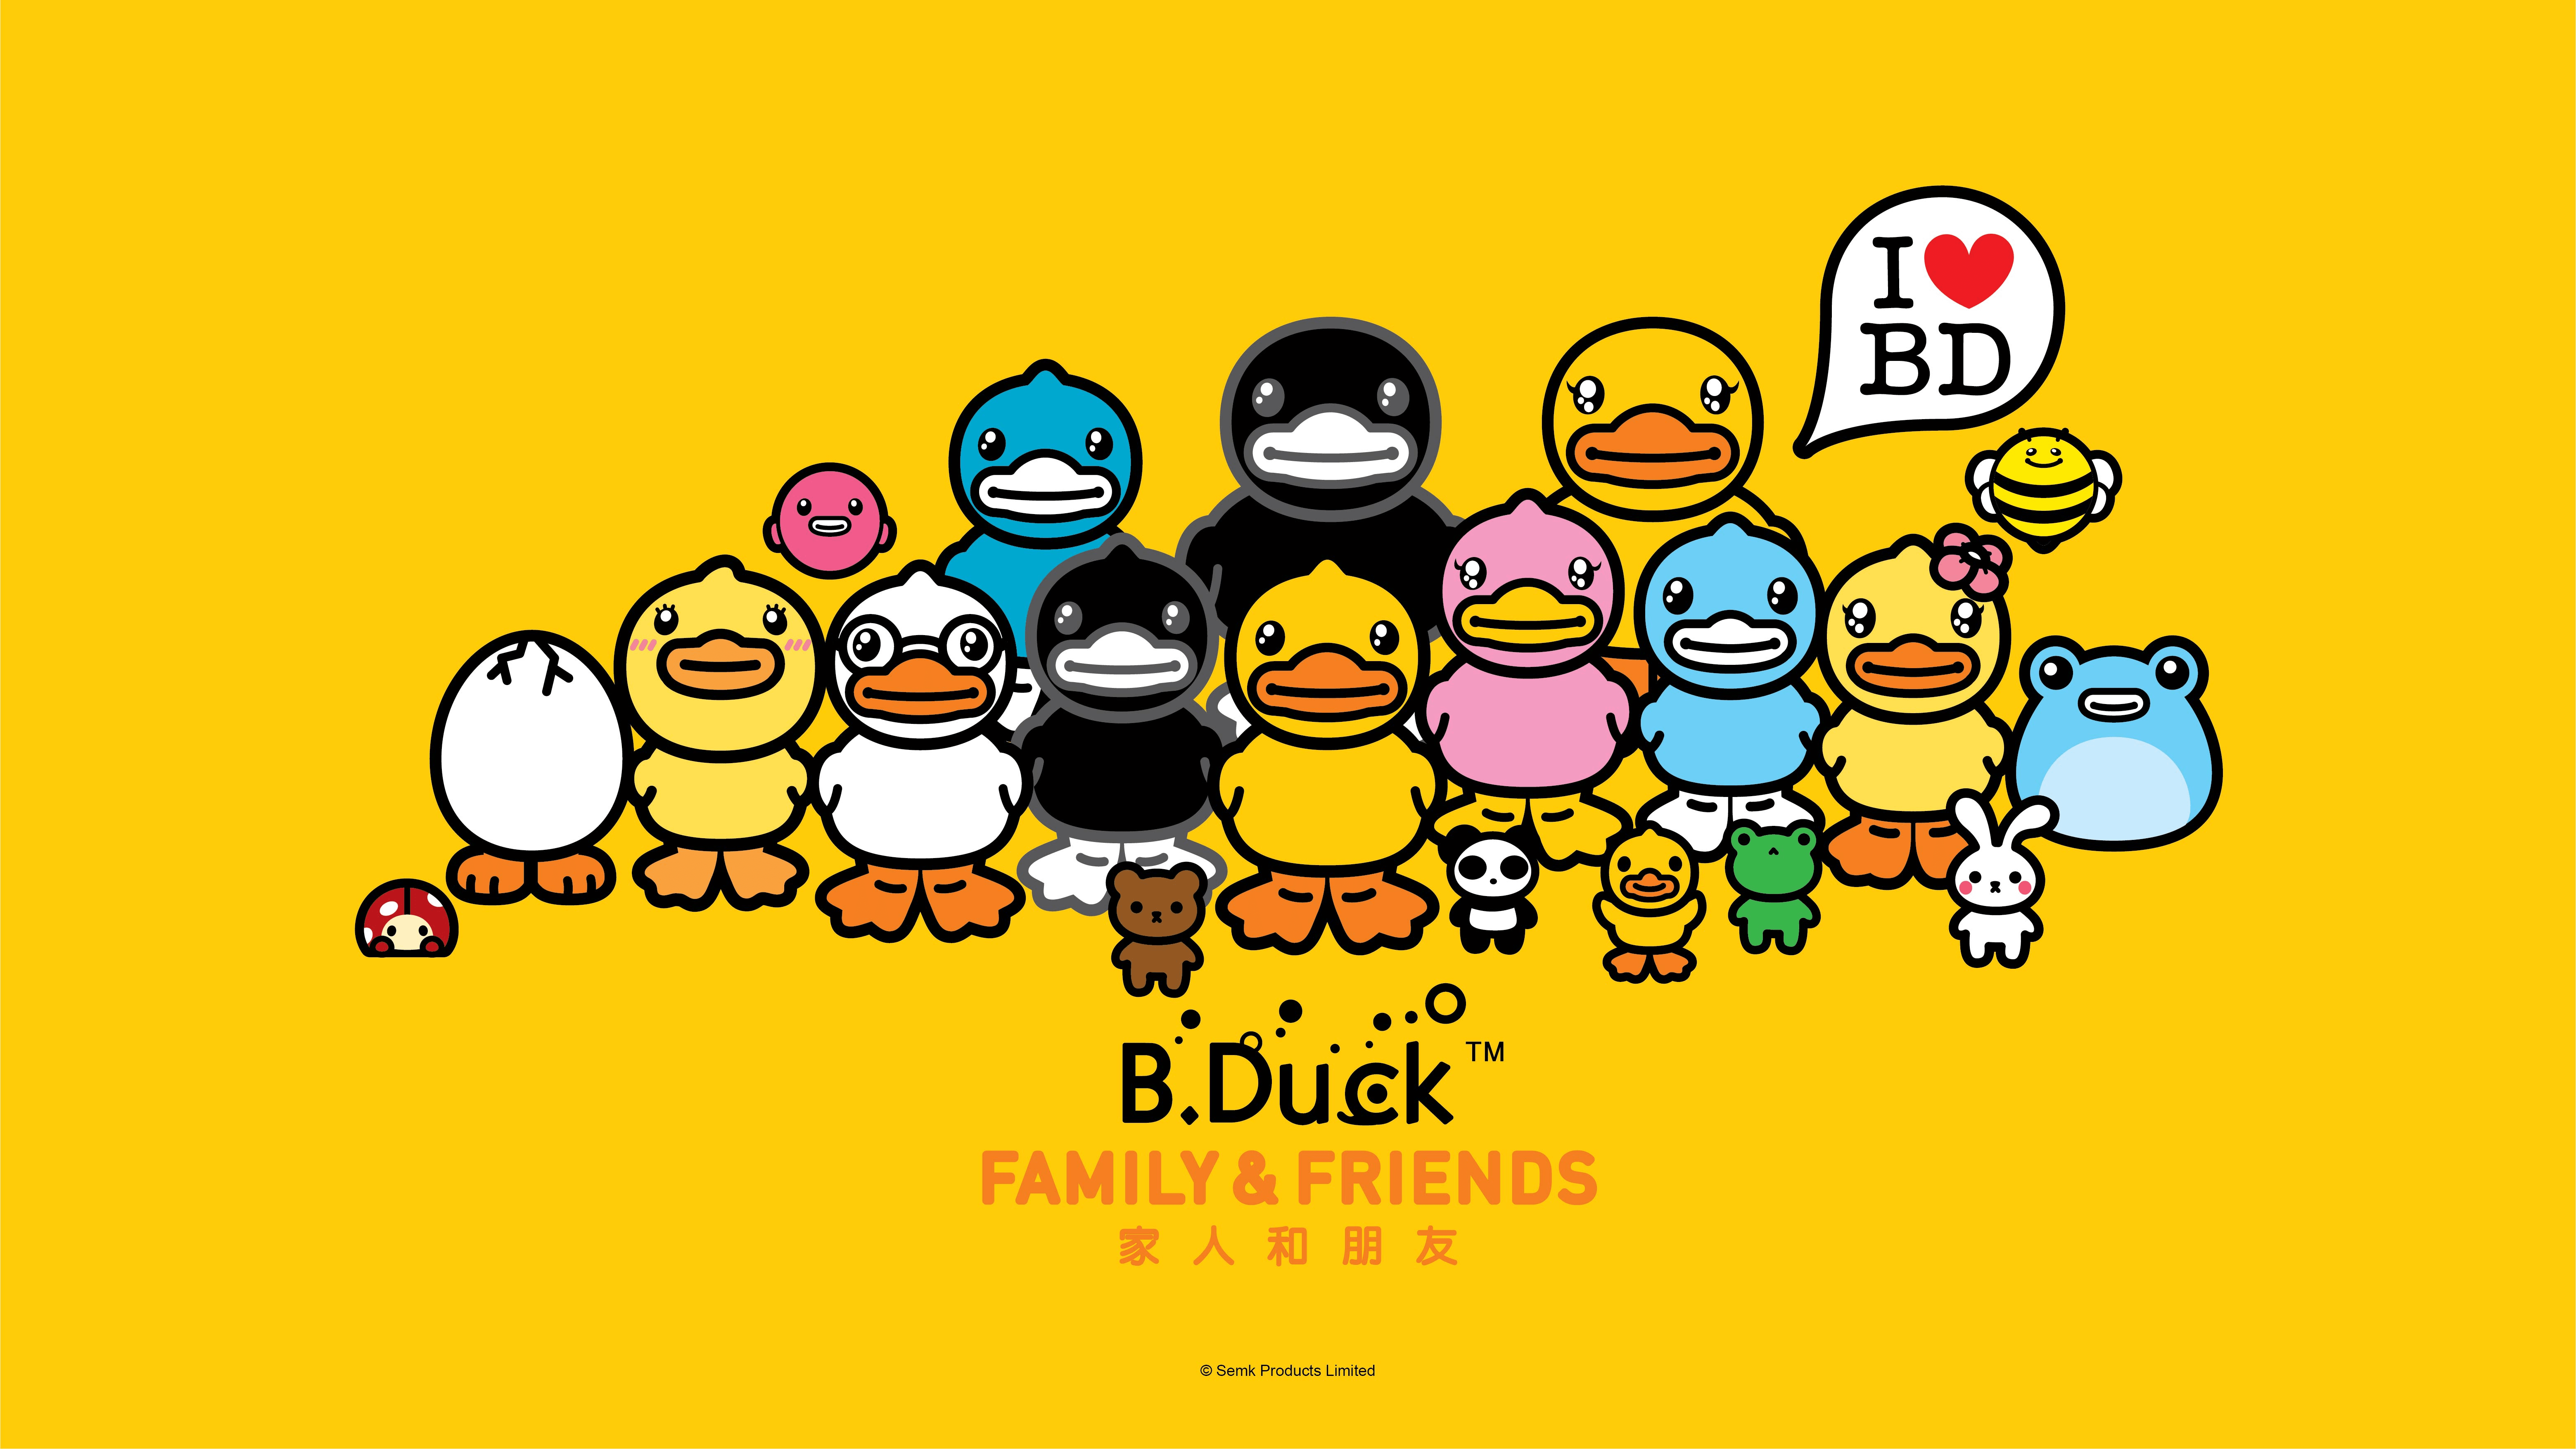 b.duck小黄鸭,诠释原创的力量!